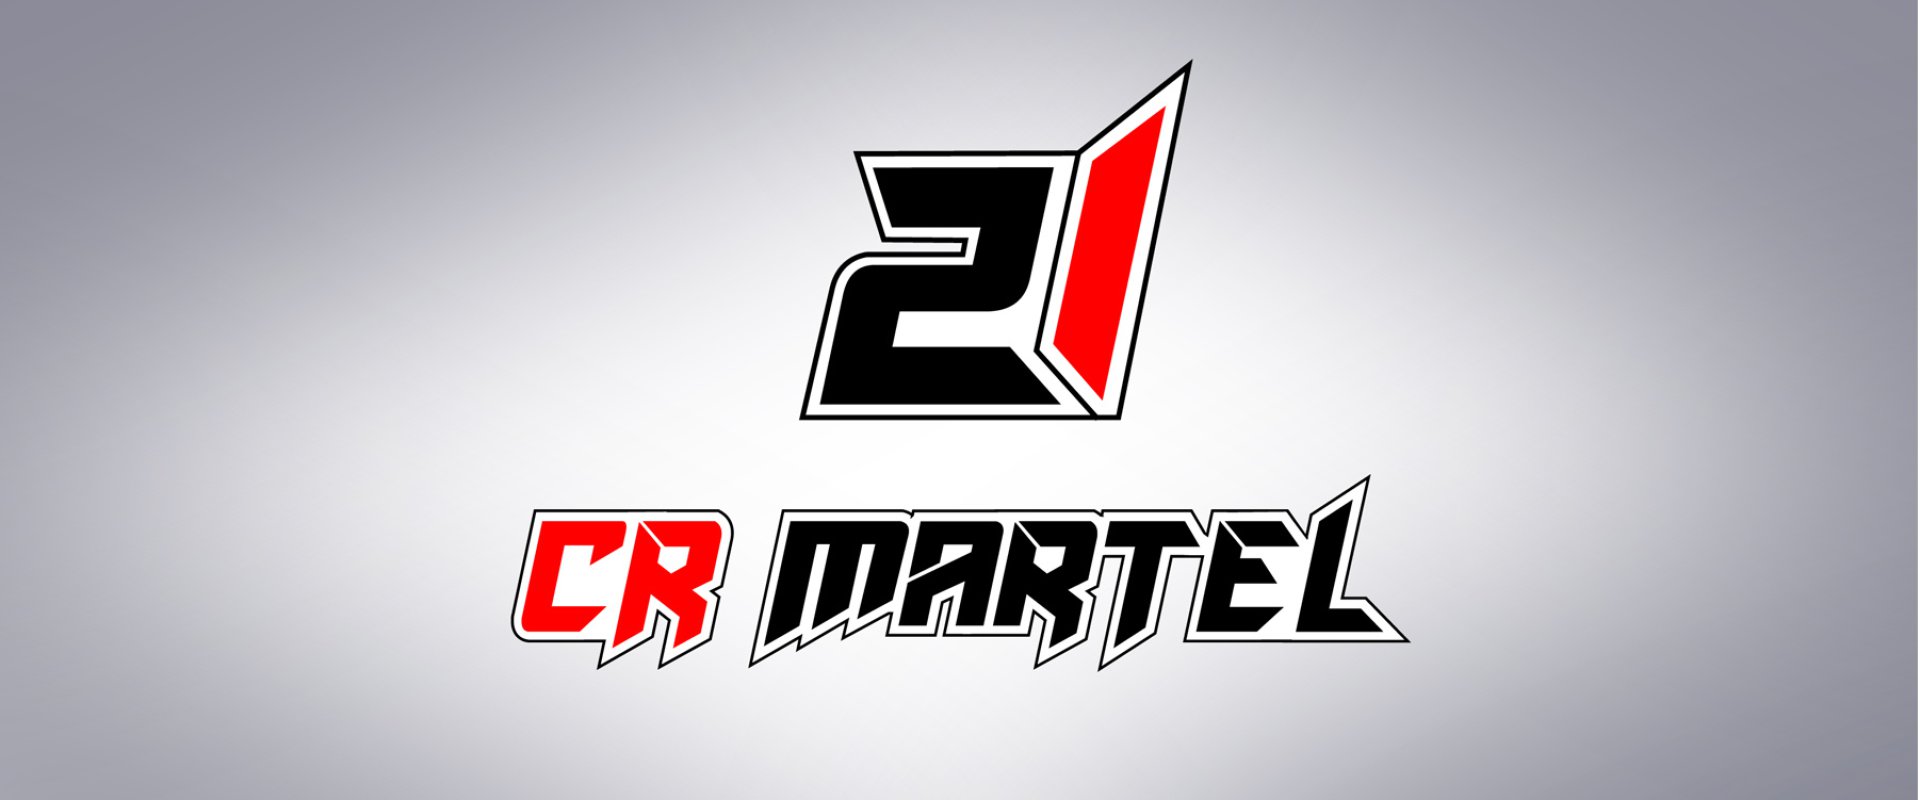 CR Martel #1